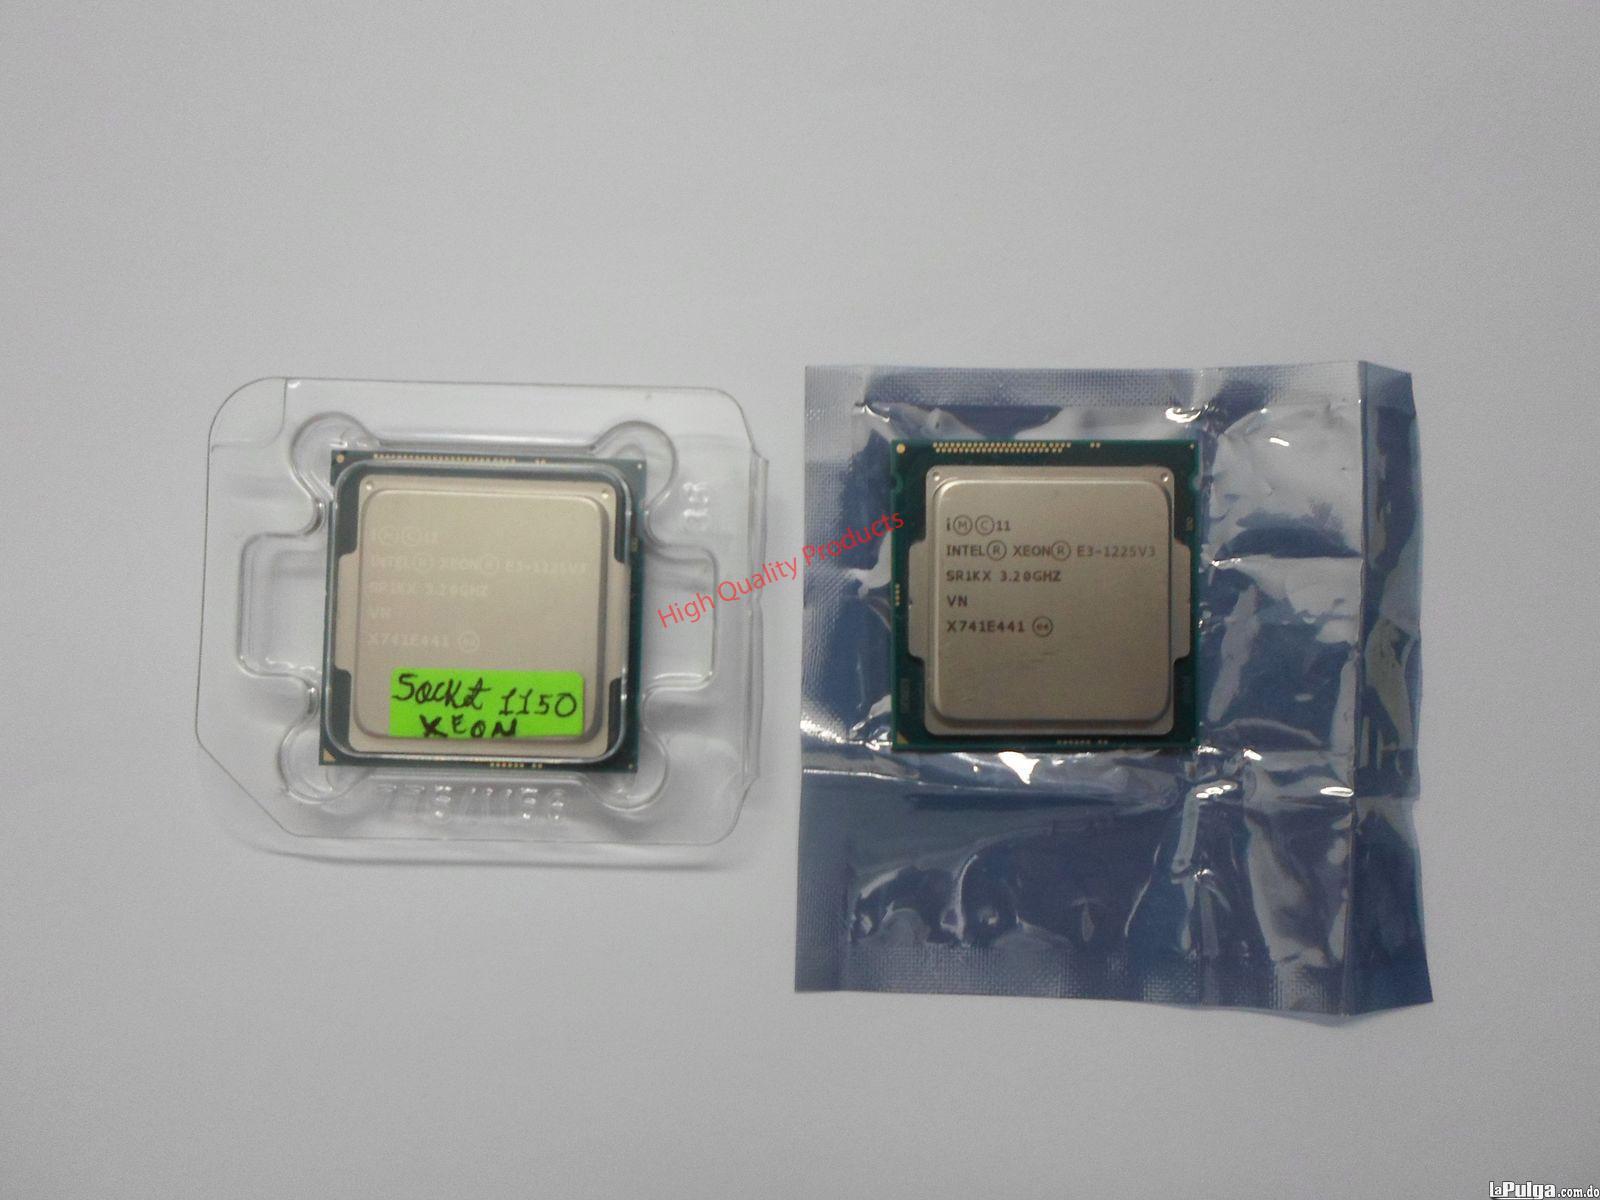 -----Procesador Intel Xeon E3-1225 v3 Socket 1150 3.20GHz Foto 7137500-1.jpg